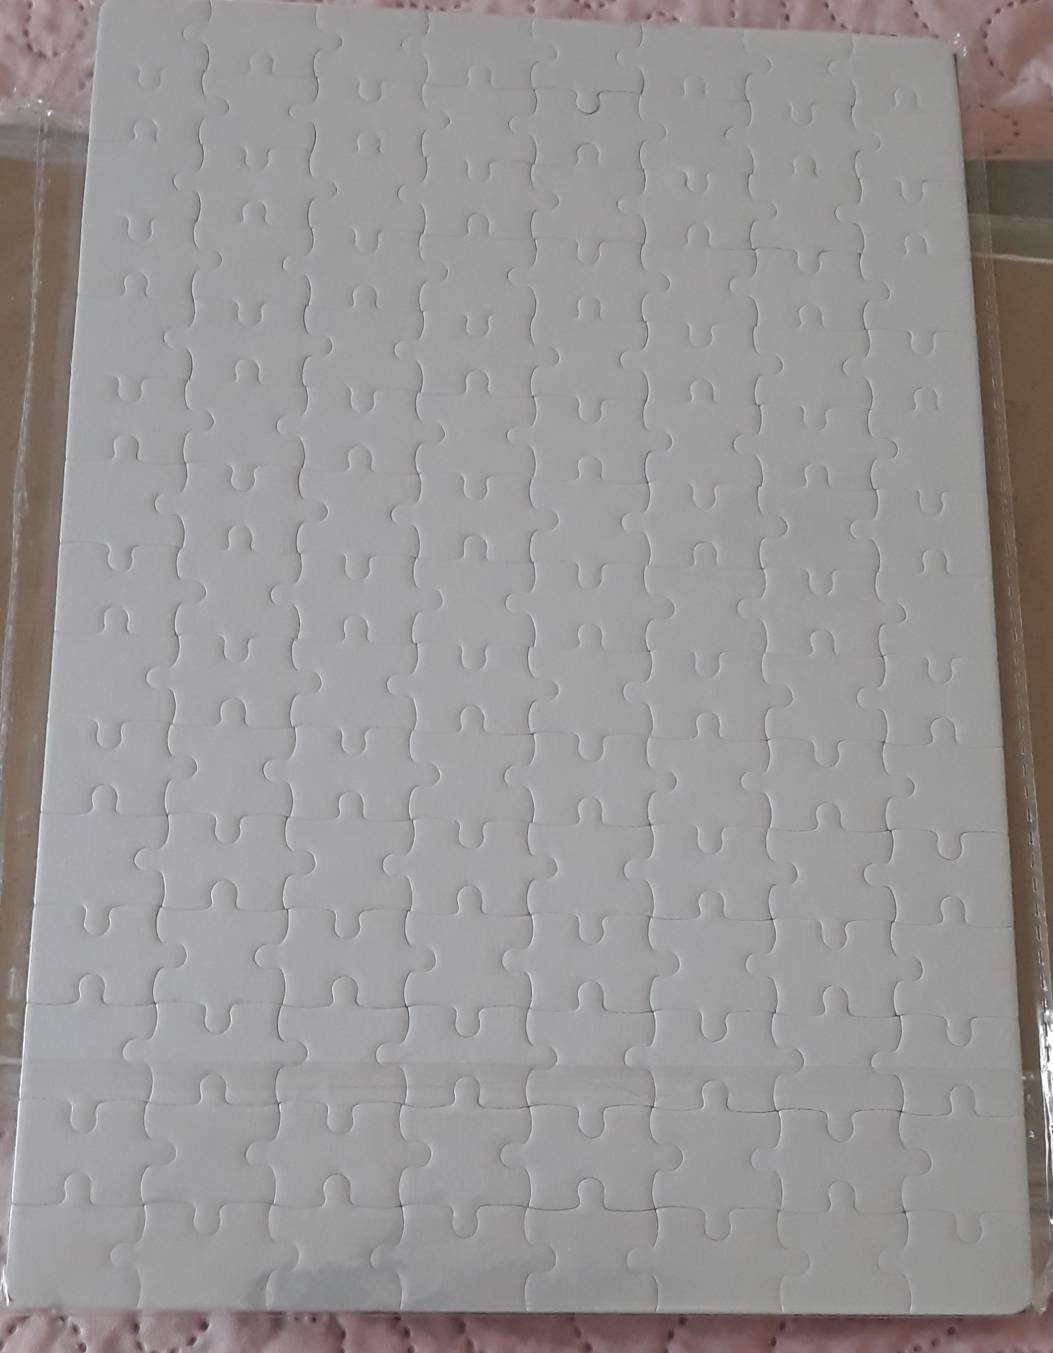 A4 sublimation blank puzzle 10 pcs/lot DIY Sublimation Blanks